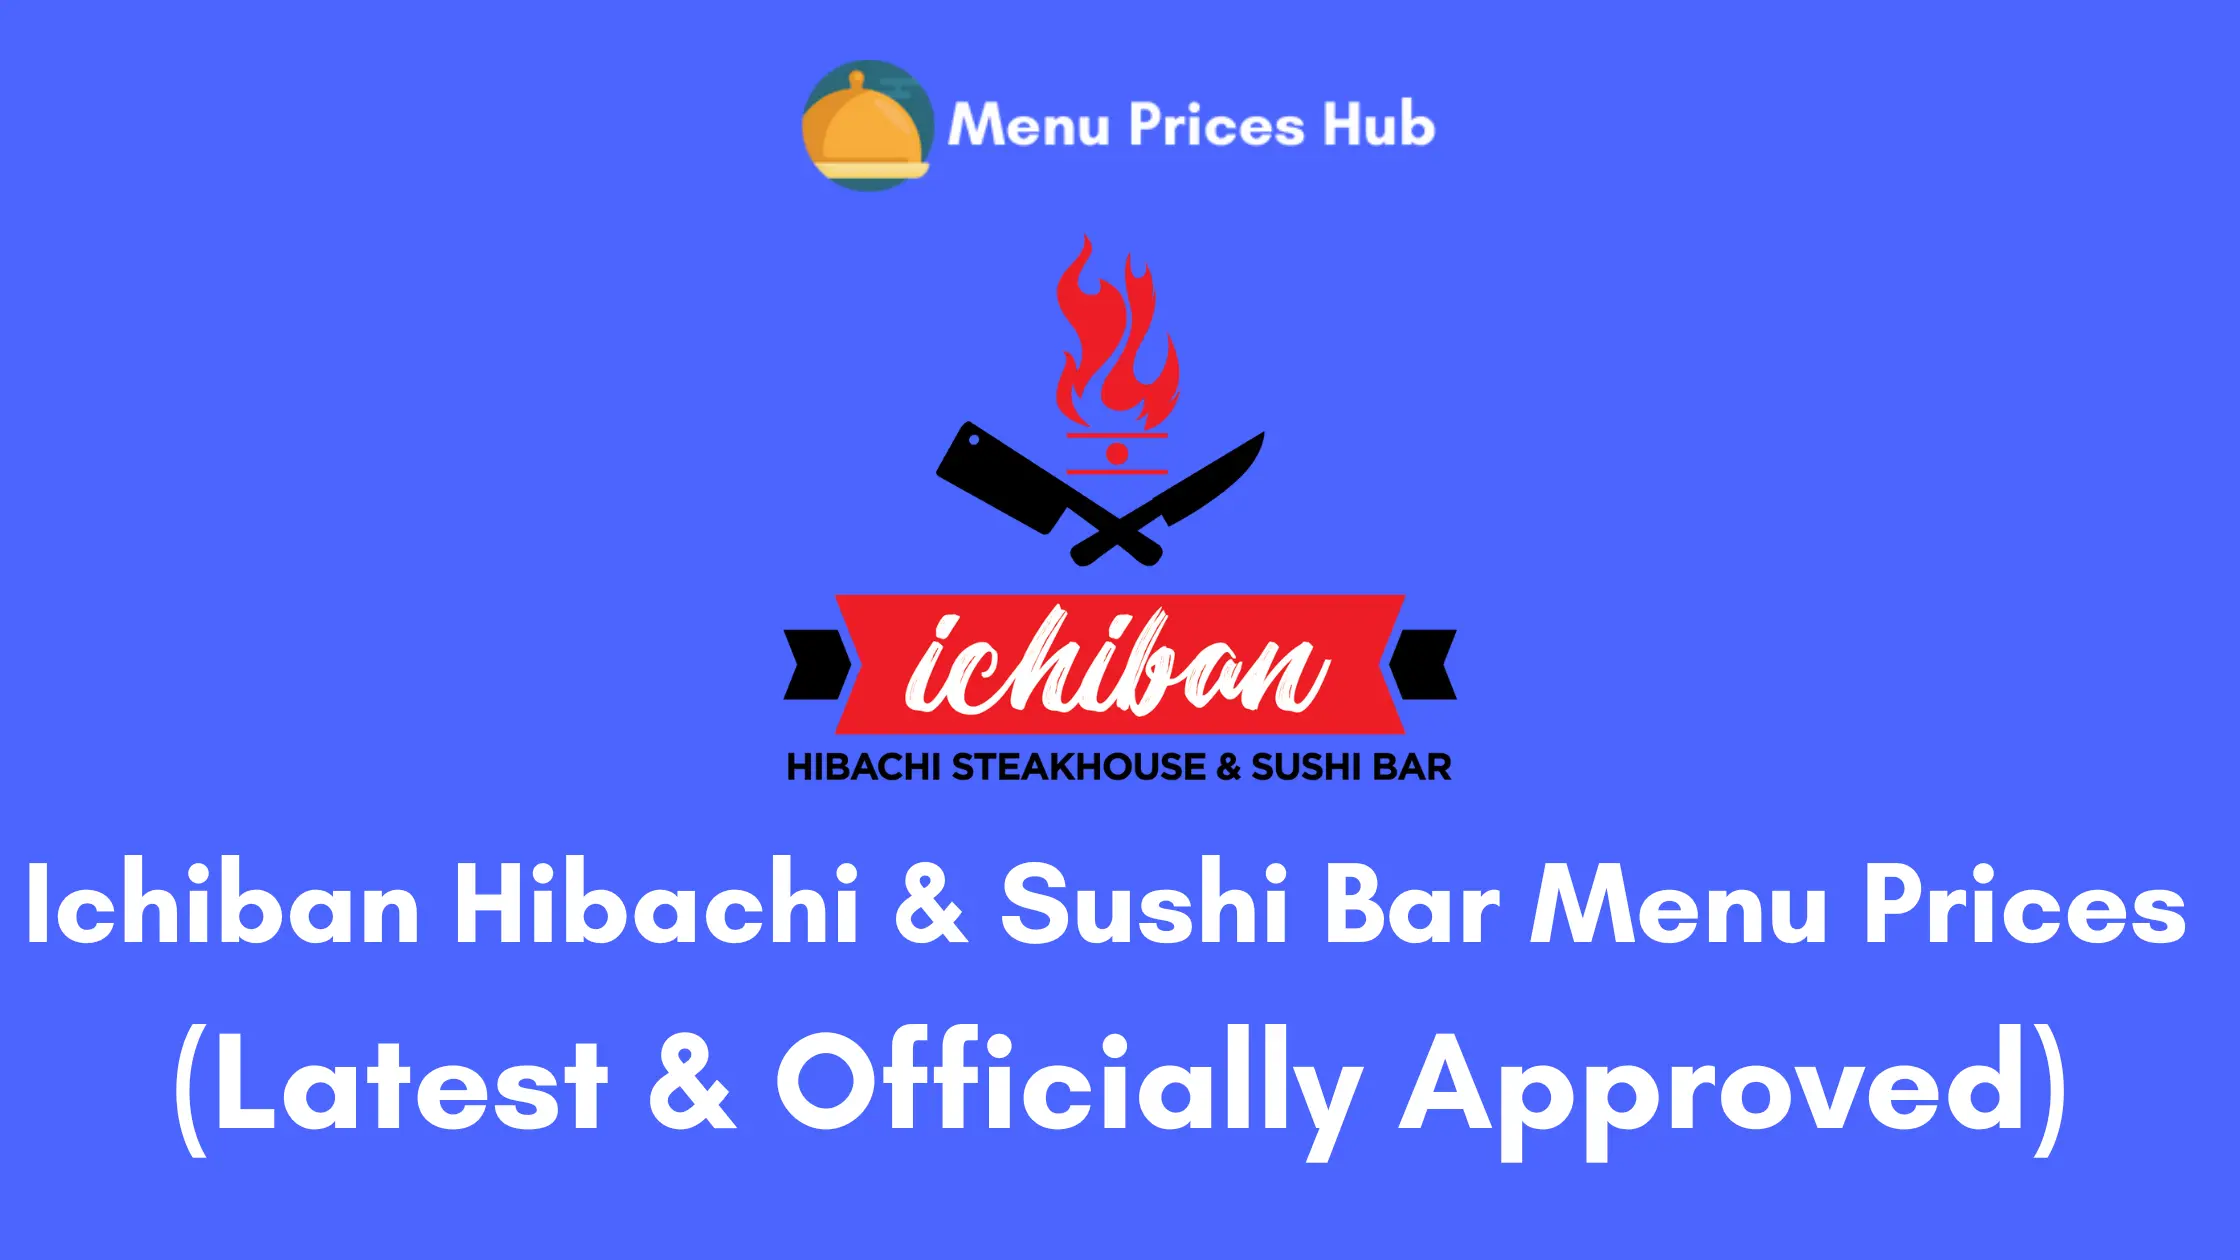 ichiban hibachi & sushi bar